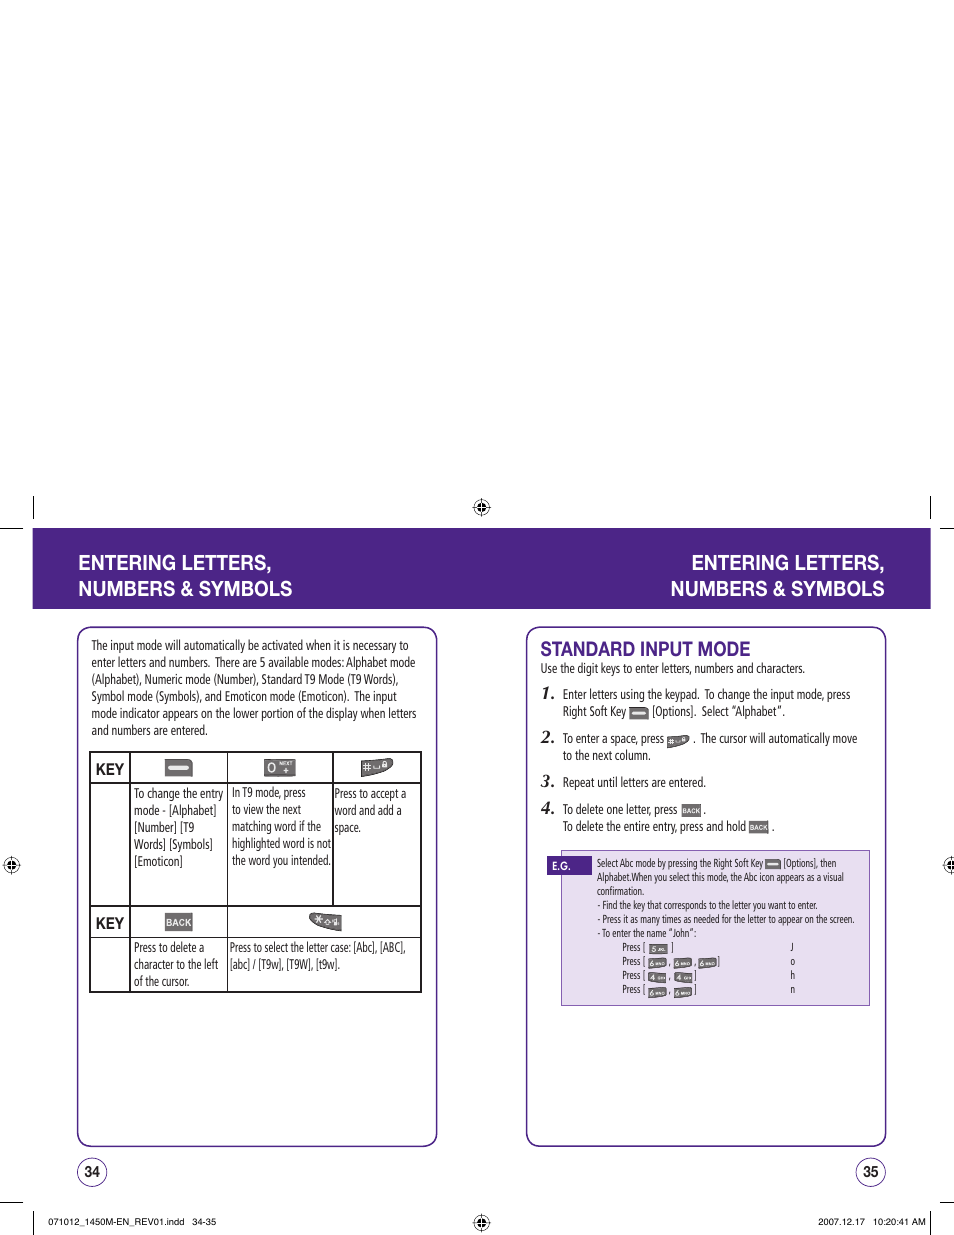 Standard input mode | UTStarcom CDM1450 User Manual | Page 18 / 166